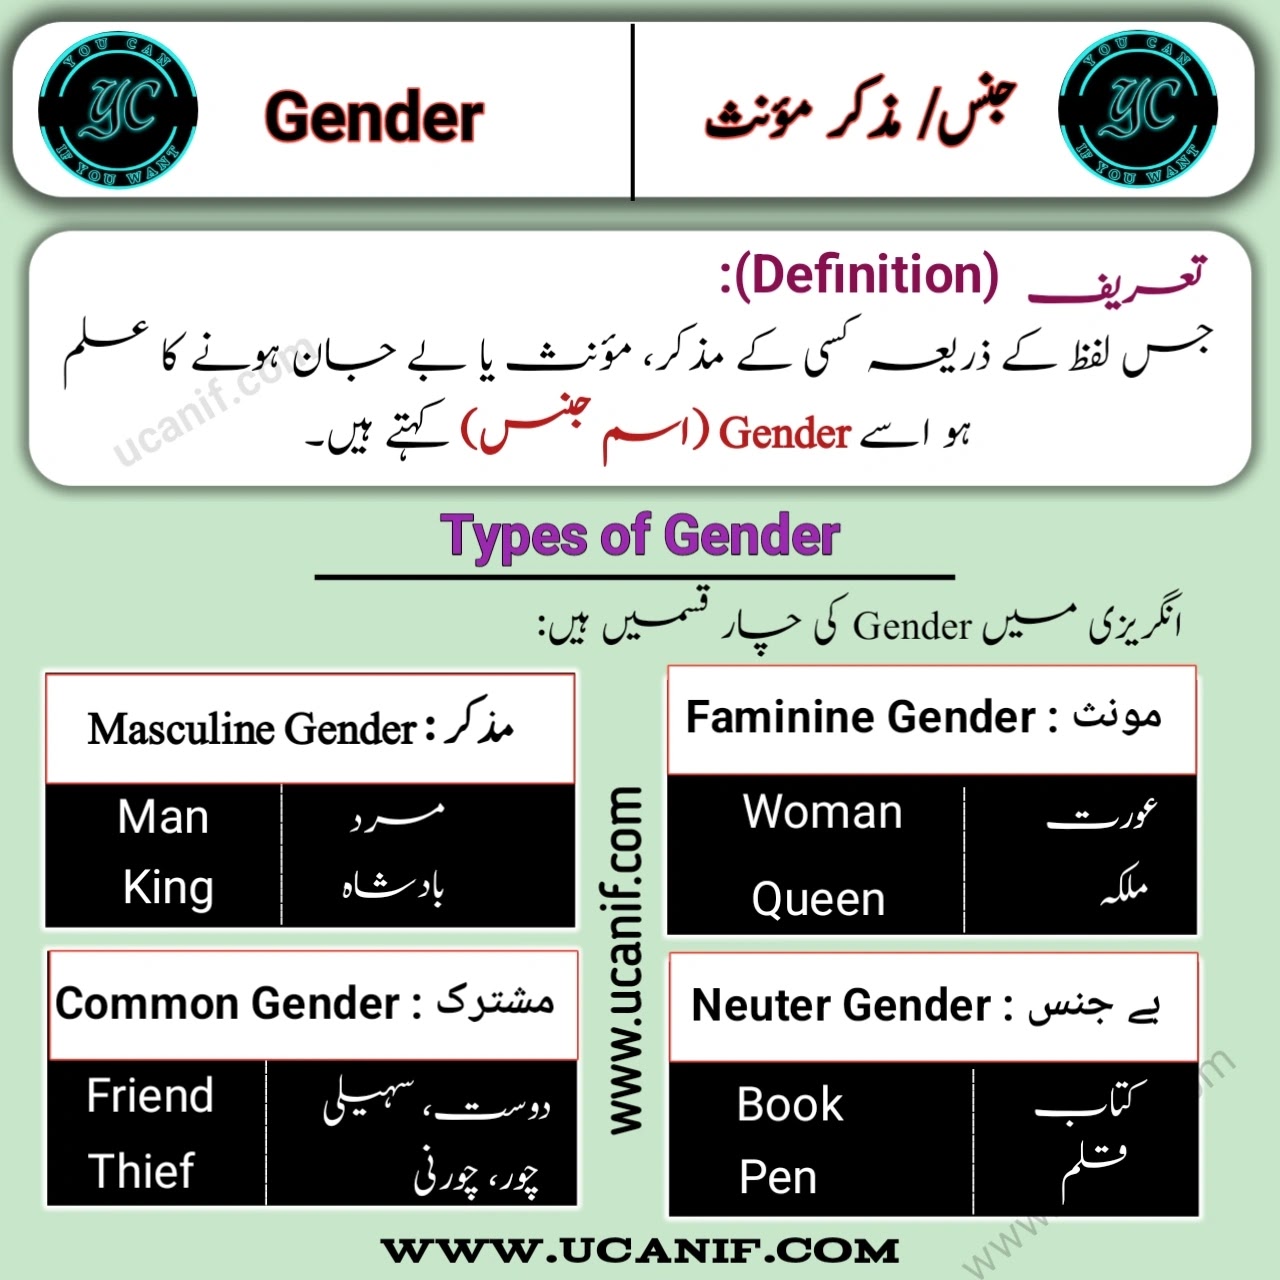 gender reassignment meaning in urdu